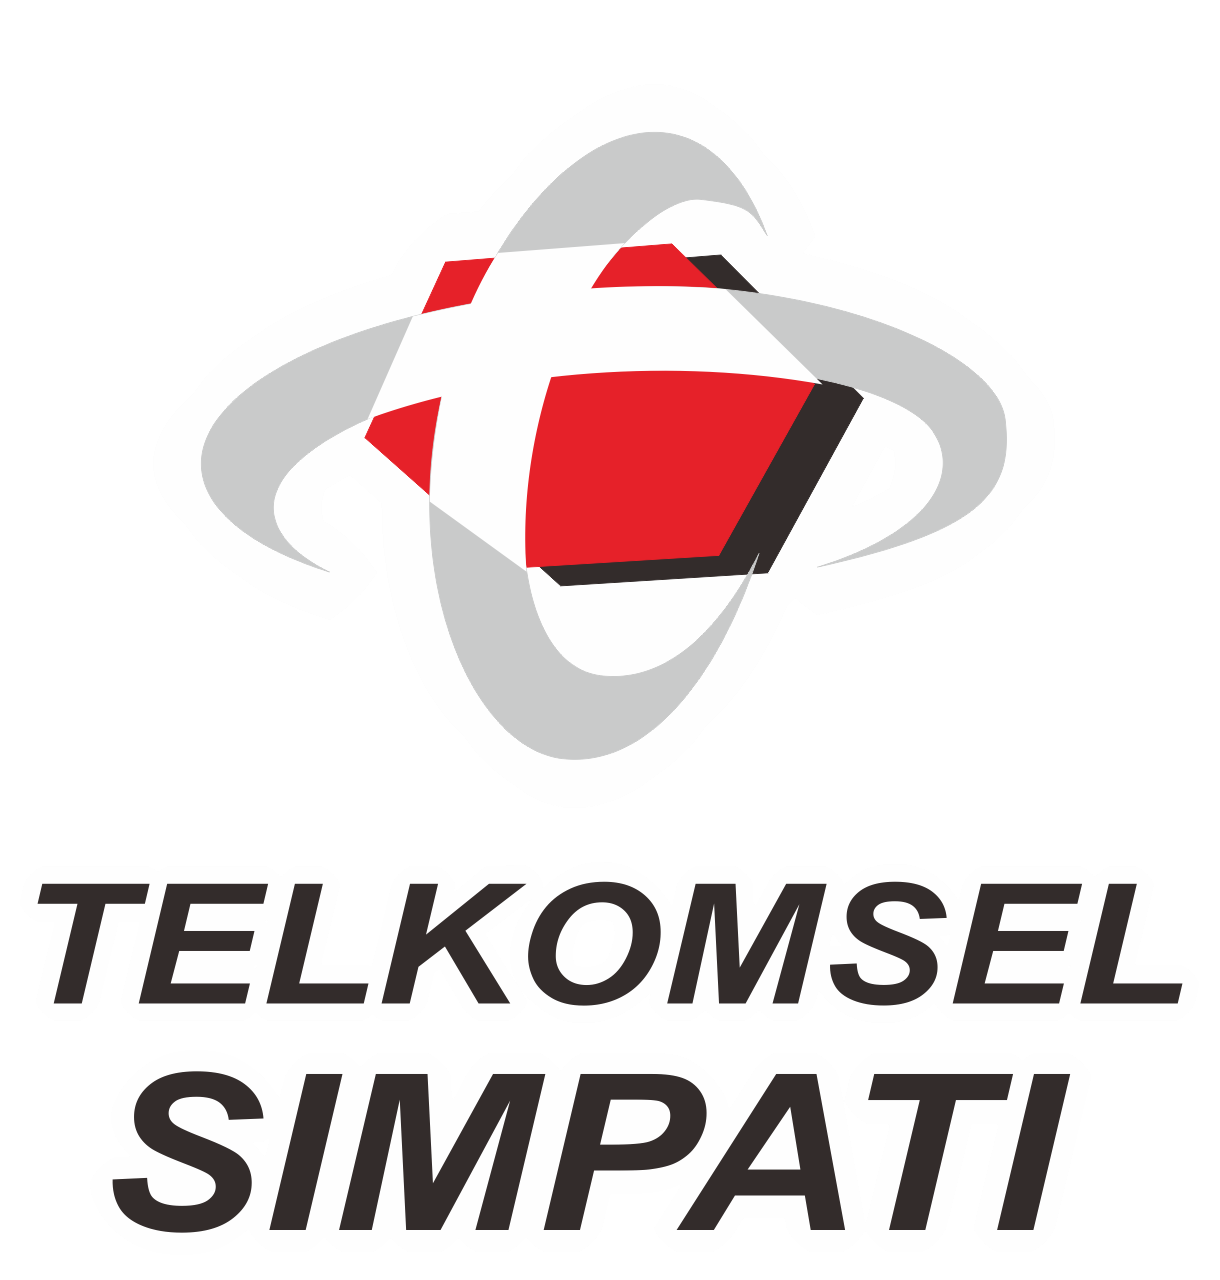 logo telkomsel free png images telkomsel logo png free transparent png logos logo telkomsel free png images